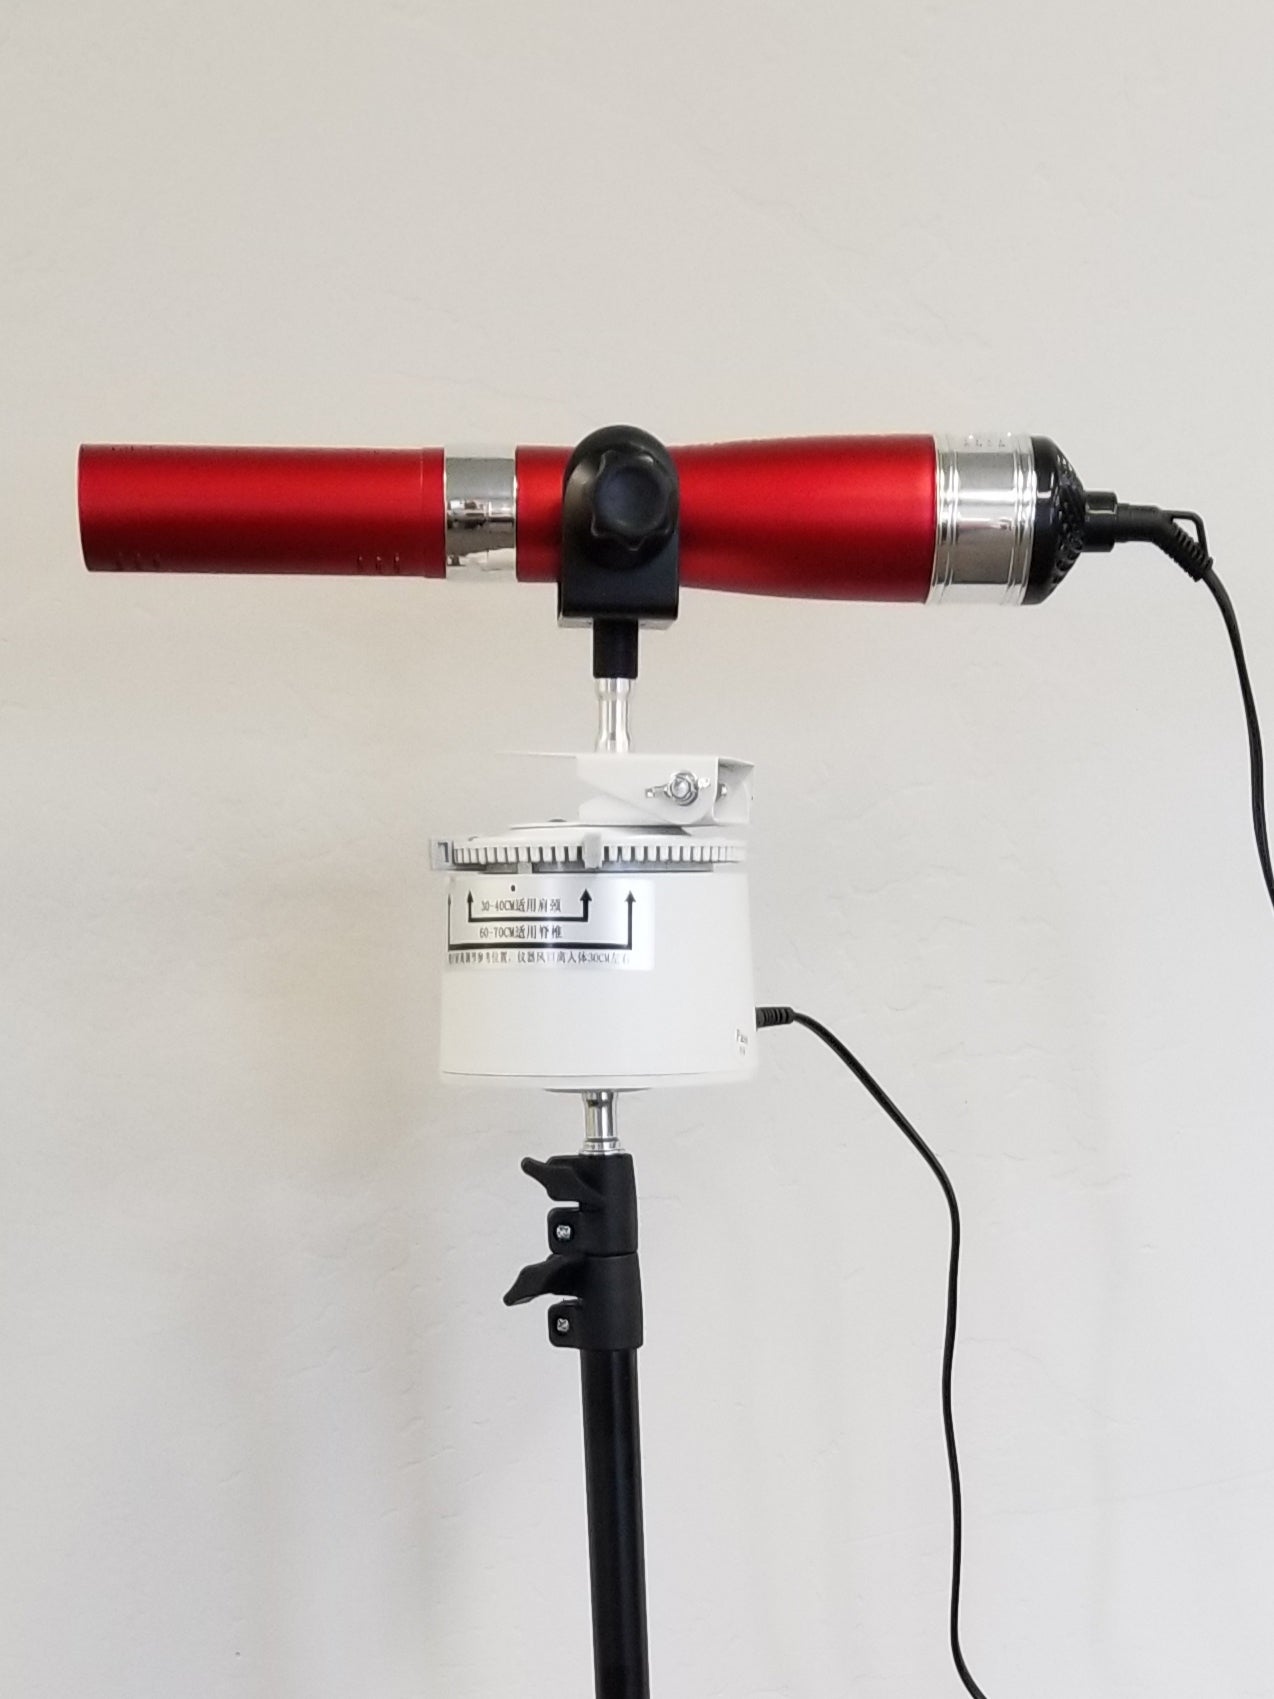 Regular Oscillating Blower Stand